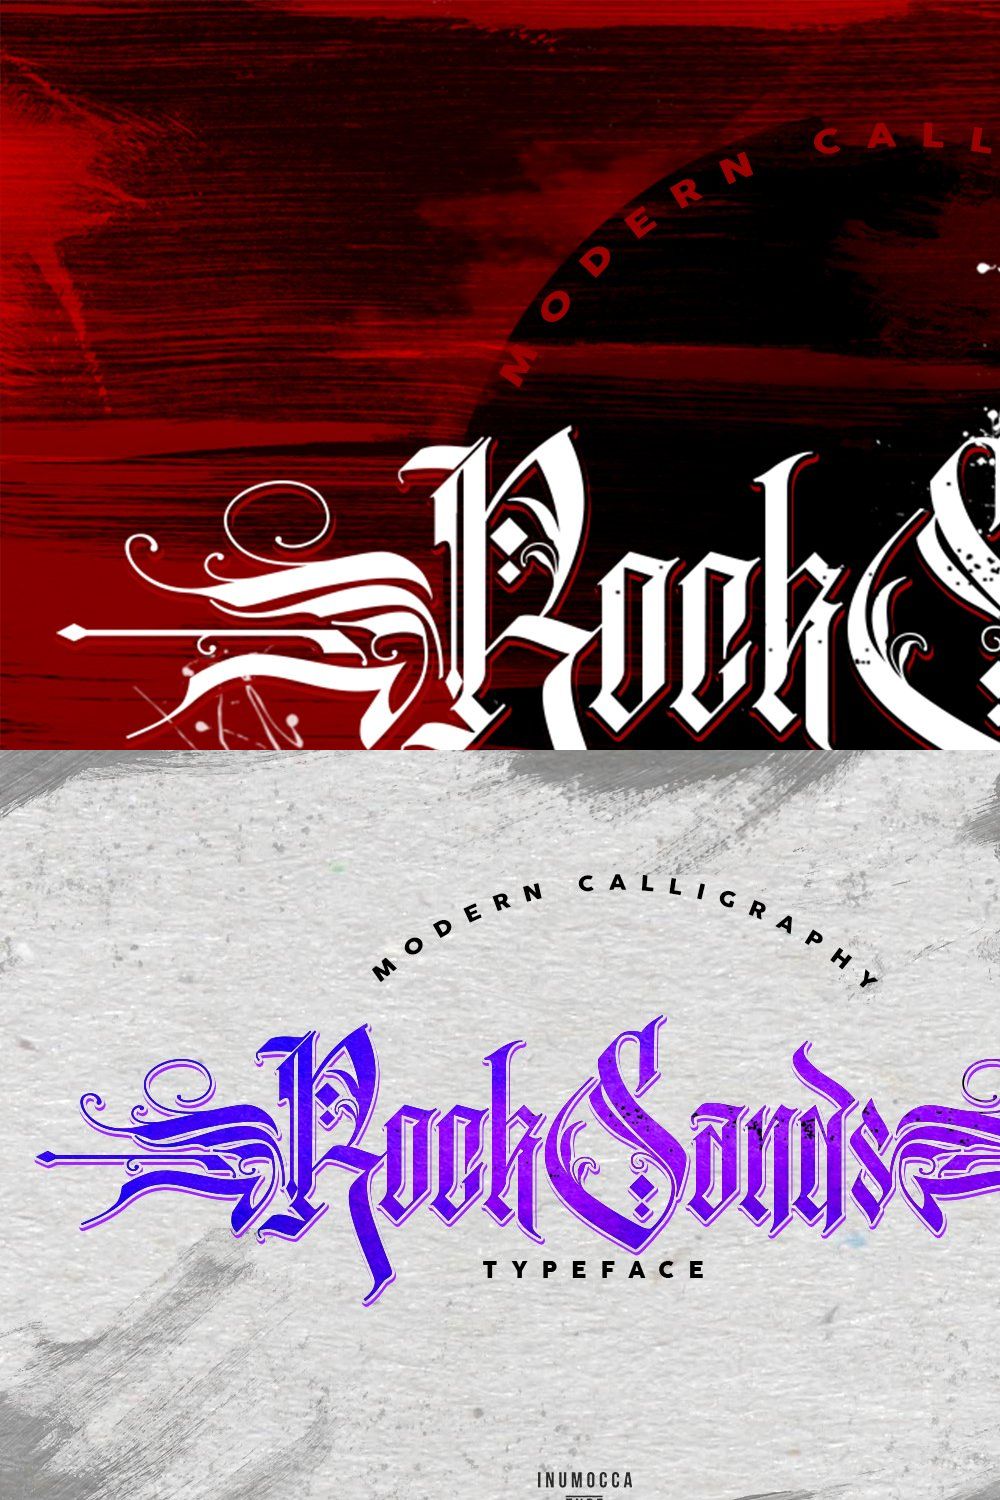 RockSands Typeface pinterest preview image.